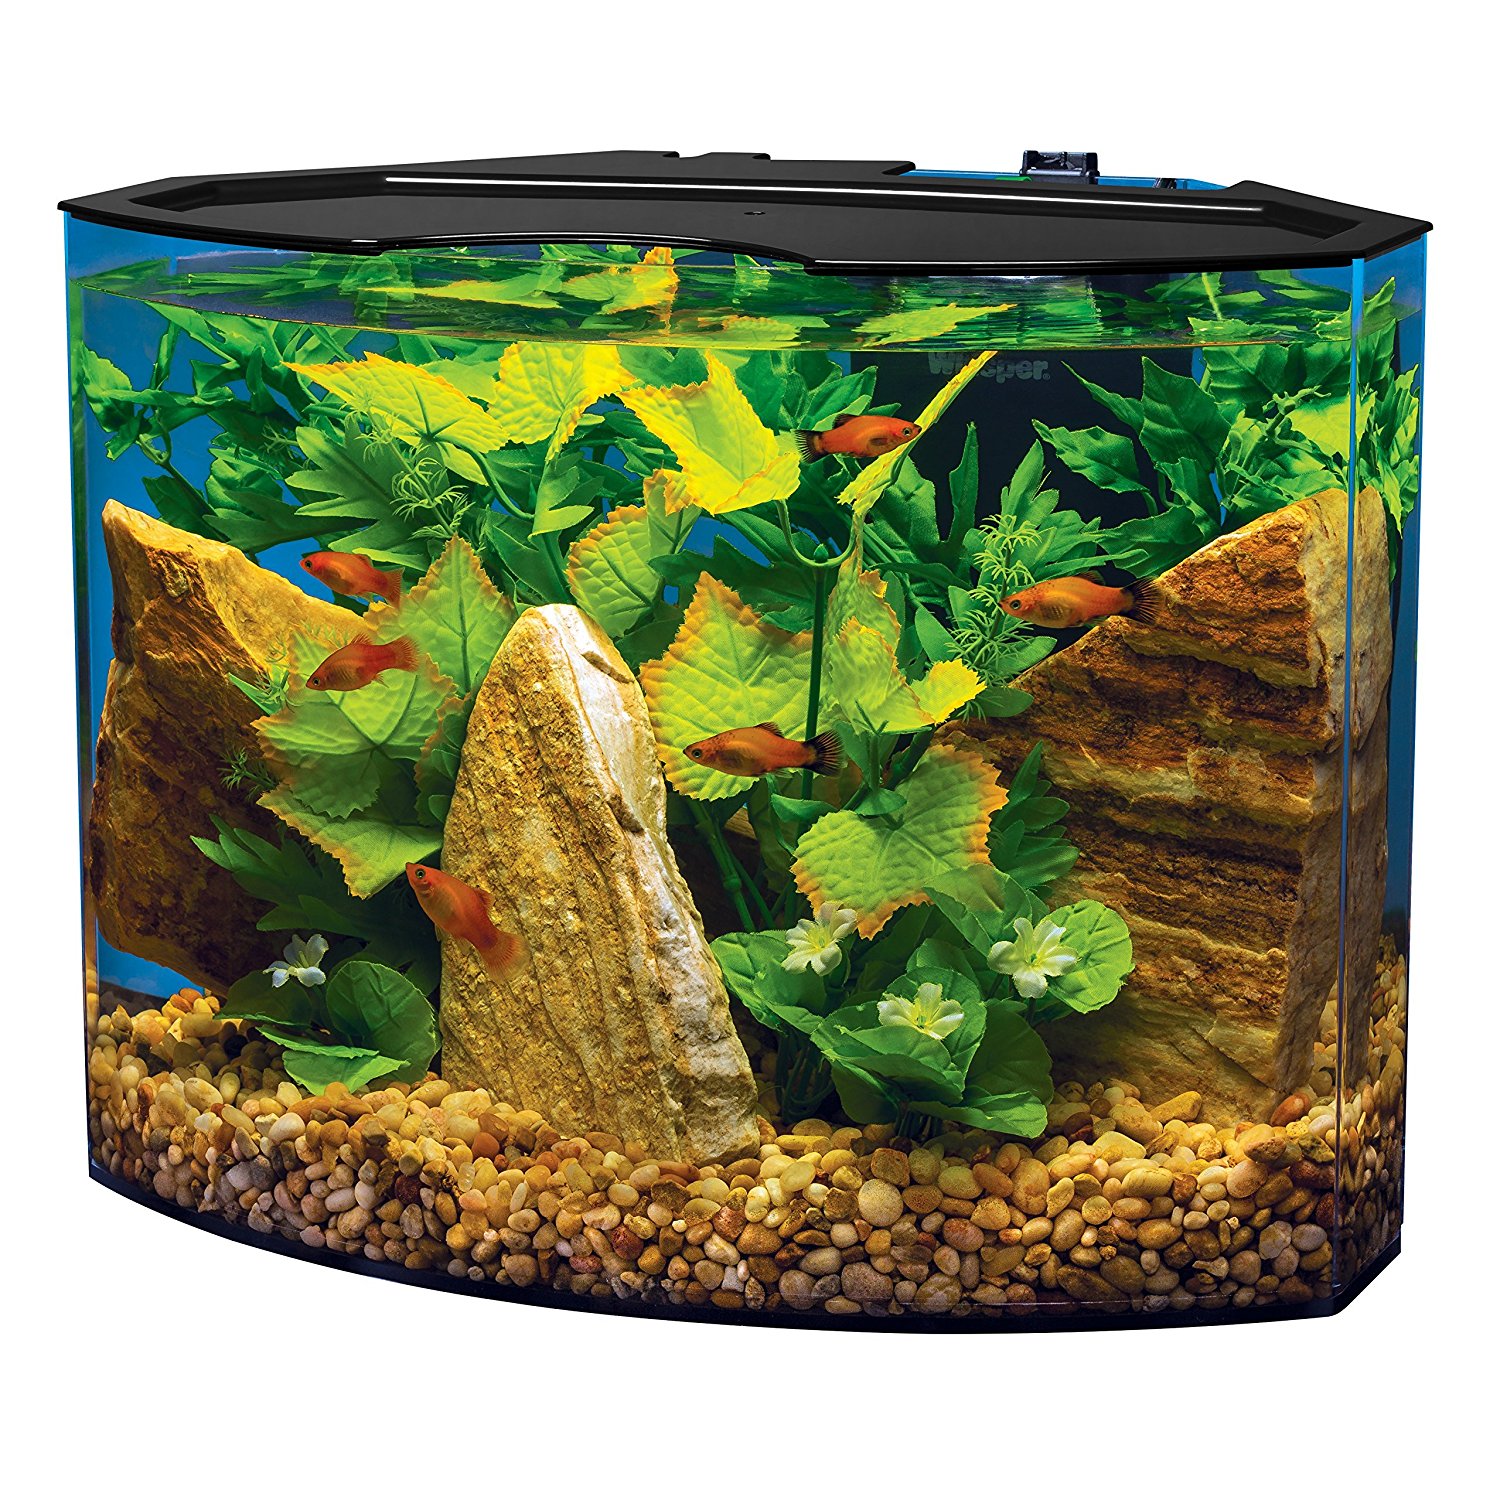 Amazon.com : Tetra Crescent Acrylic Aquarium Kit, Energy Efficient ...